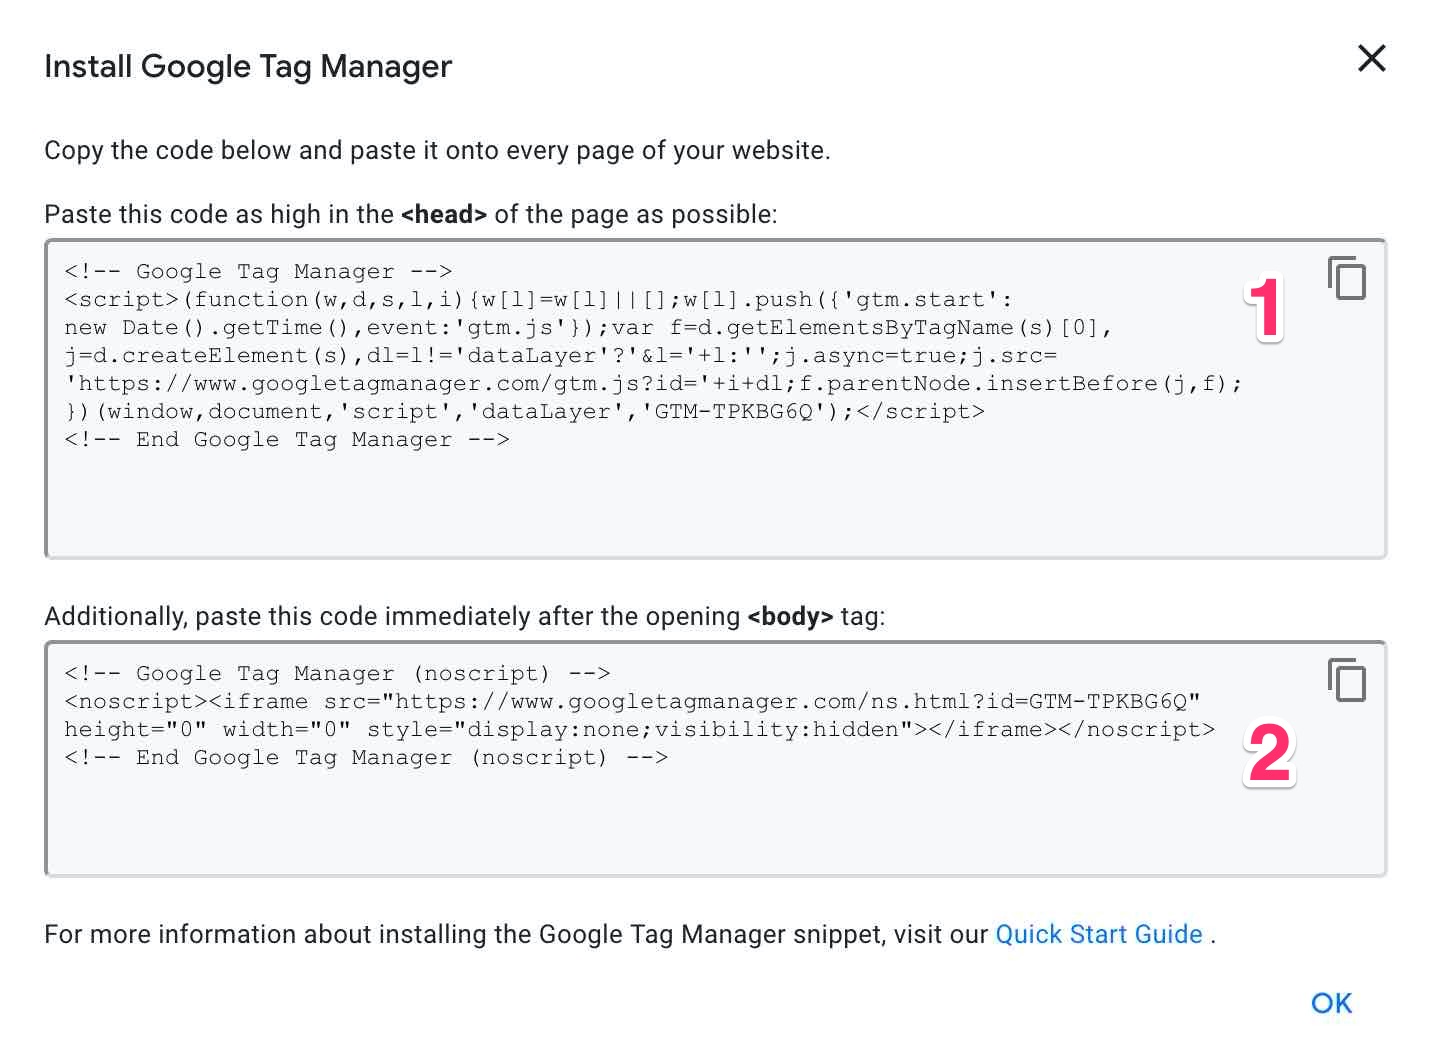 Le code de Google Tag Manager